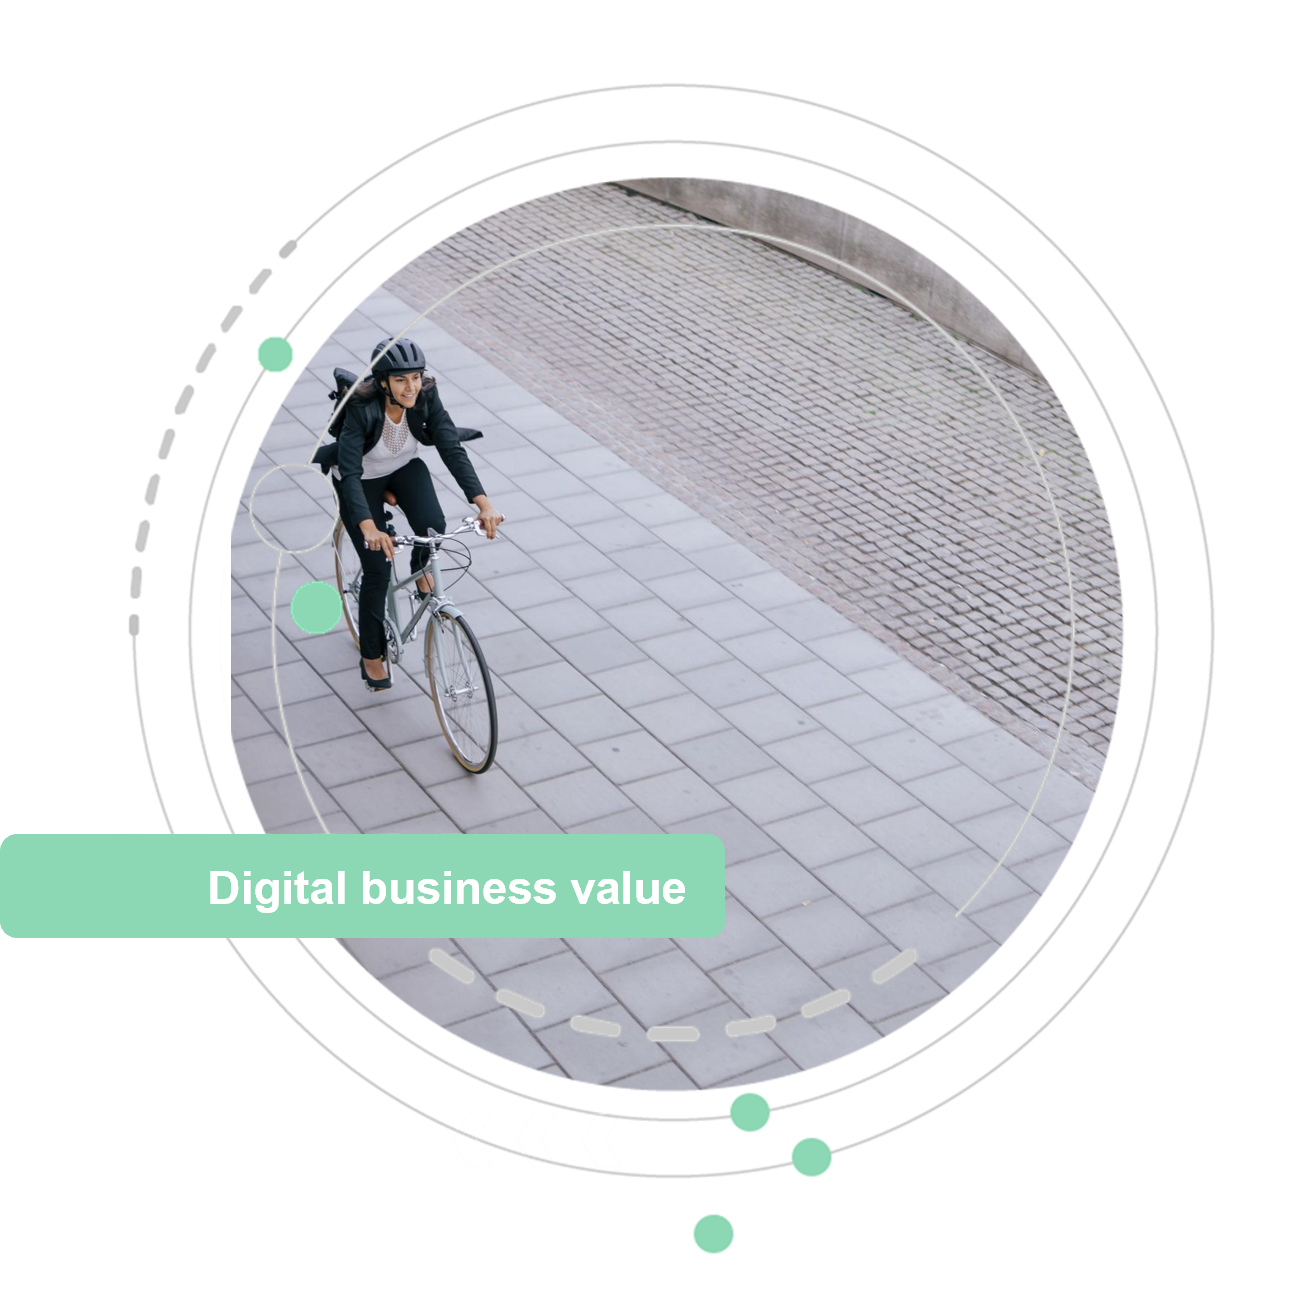 Digital business value